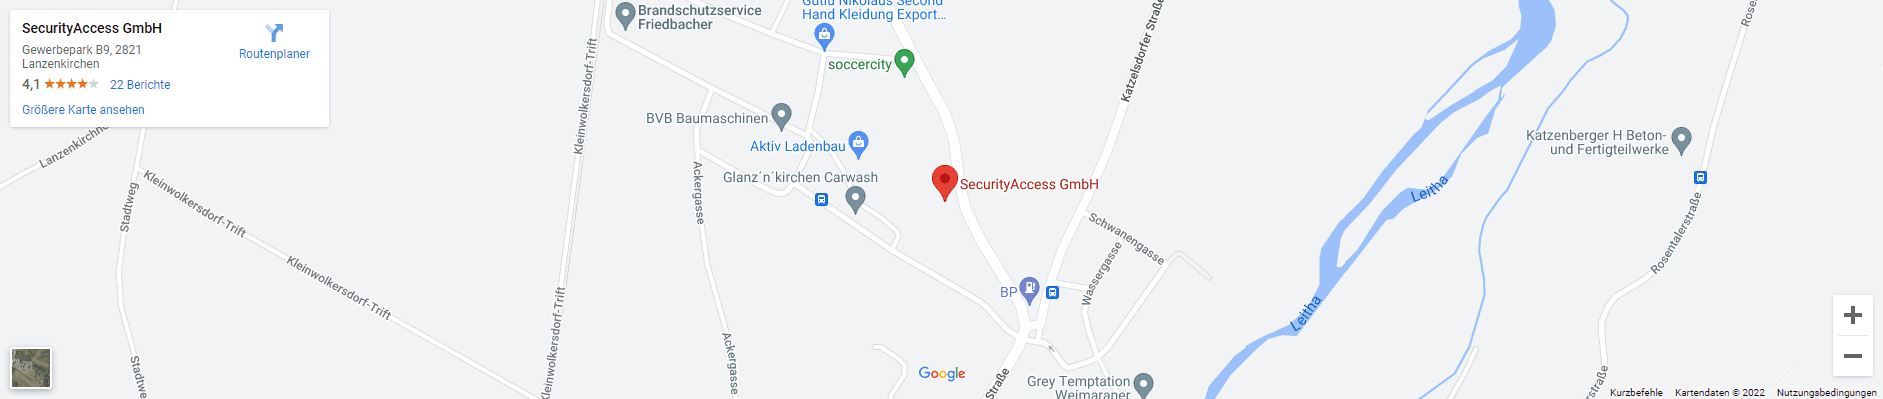 Security Access Google Maps